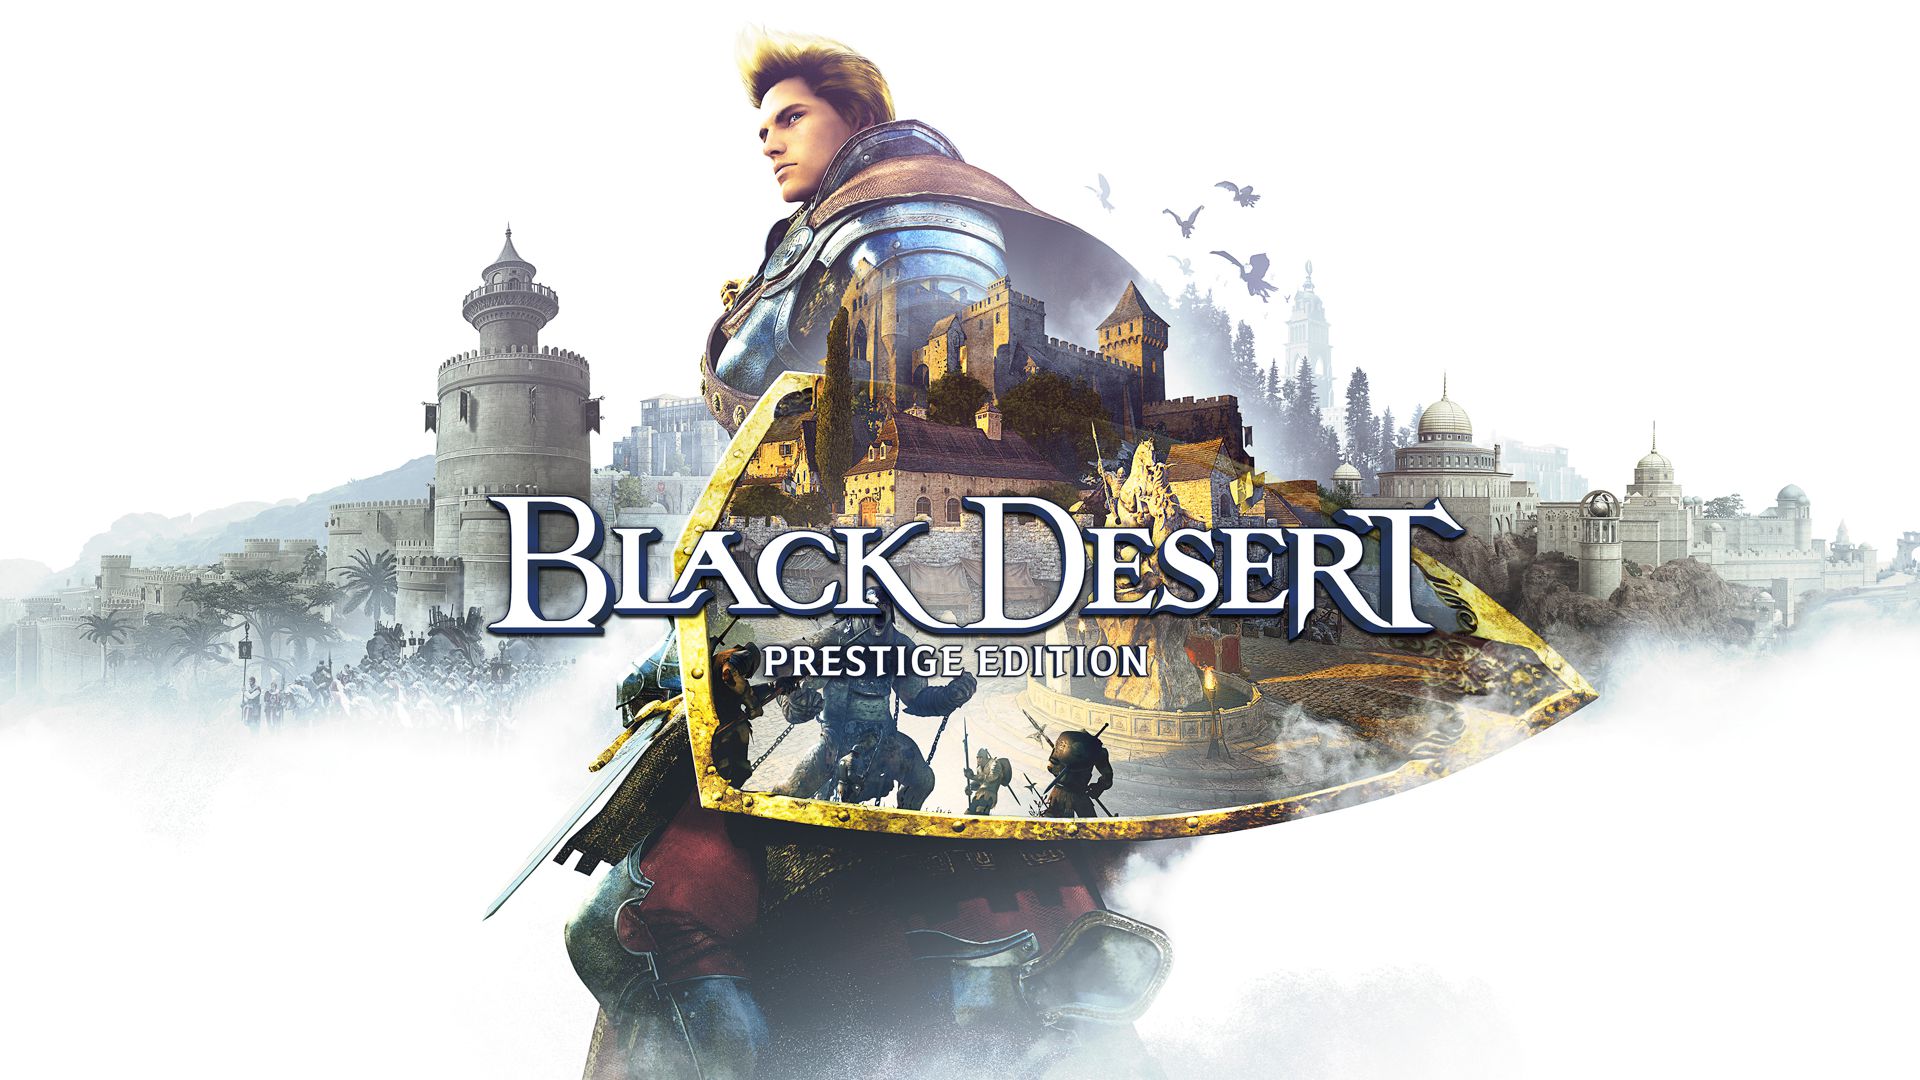 Black Desert Prestige Edition